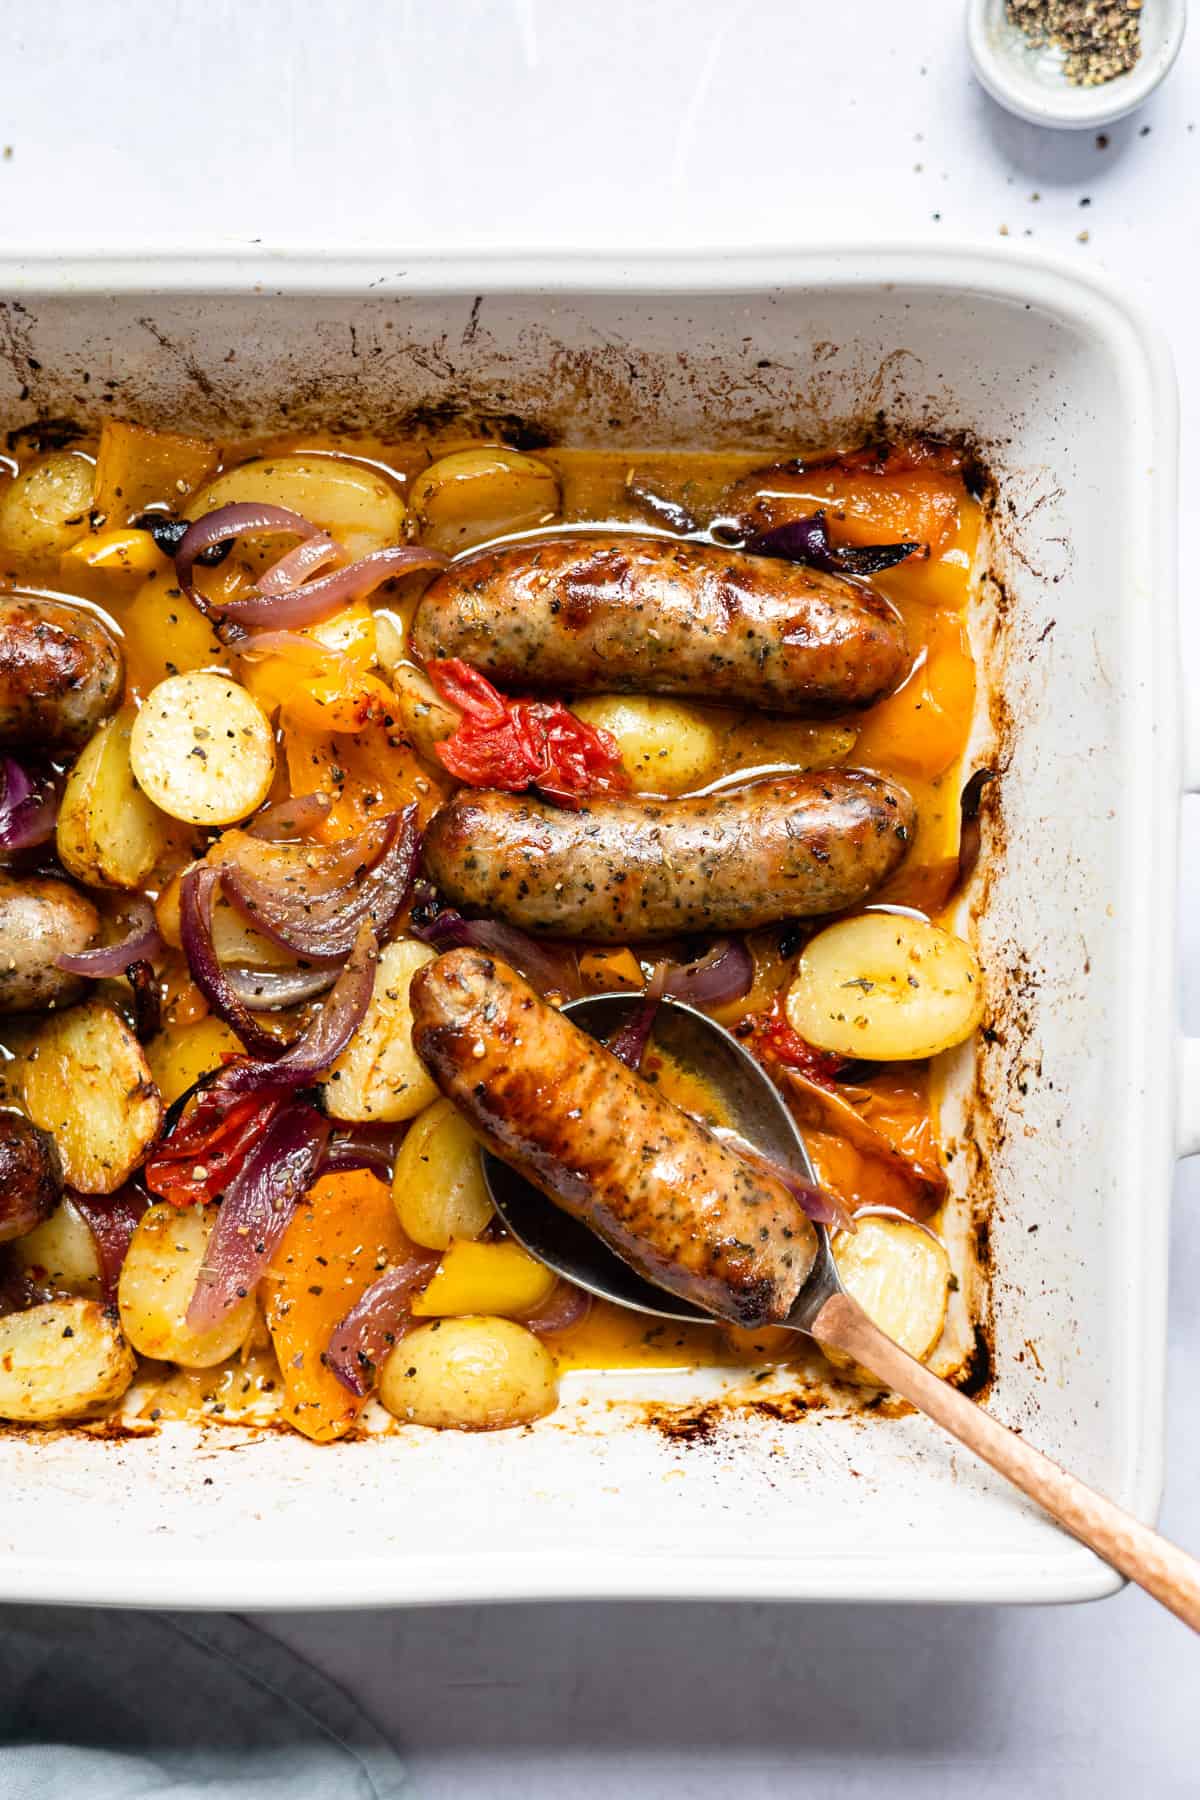 Sausage traybake with potatoes and veggies- Aldi recipes